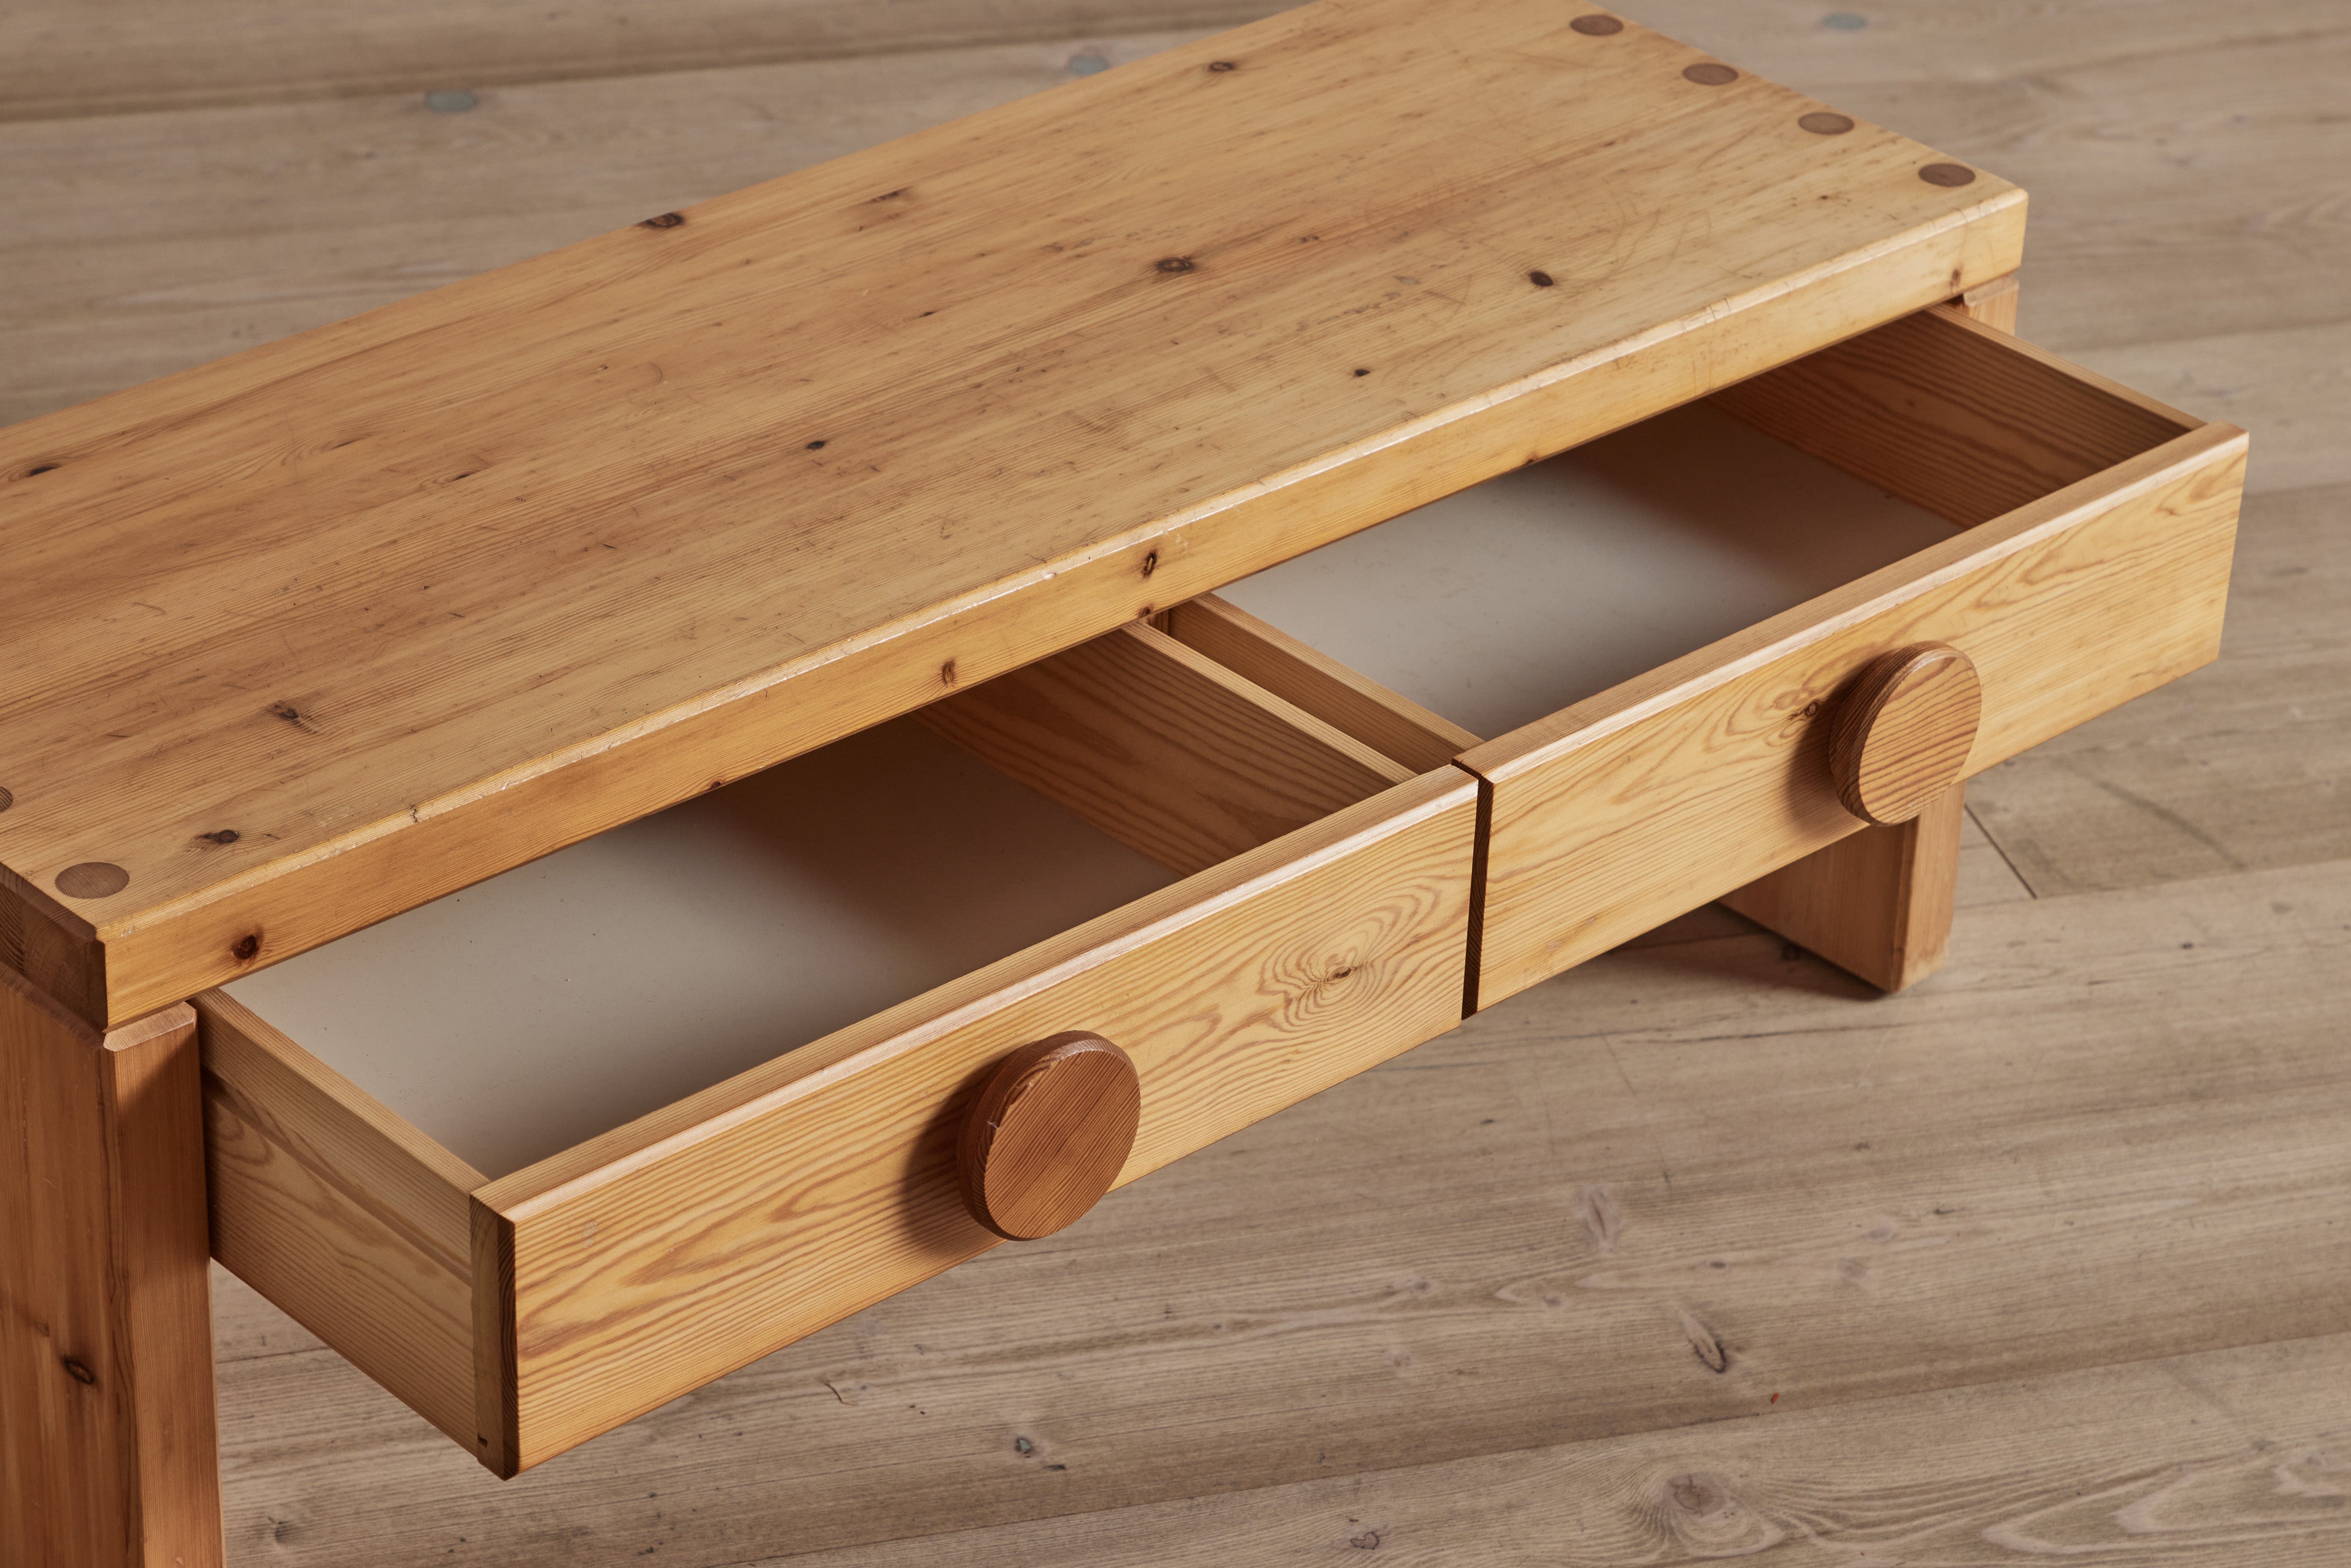 Danish Wood Bench